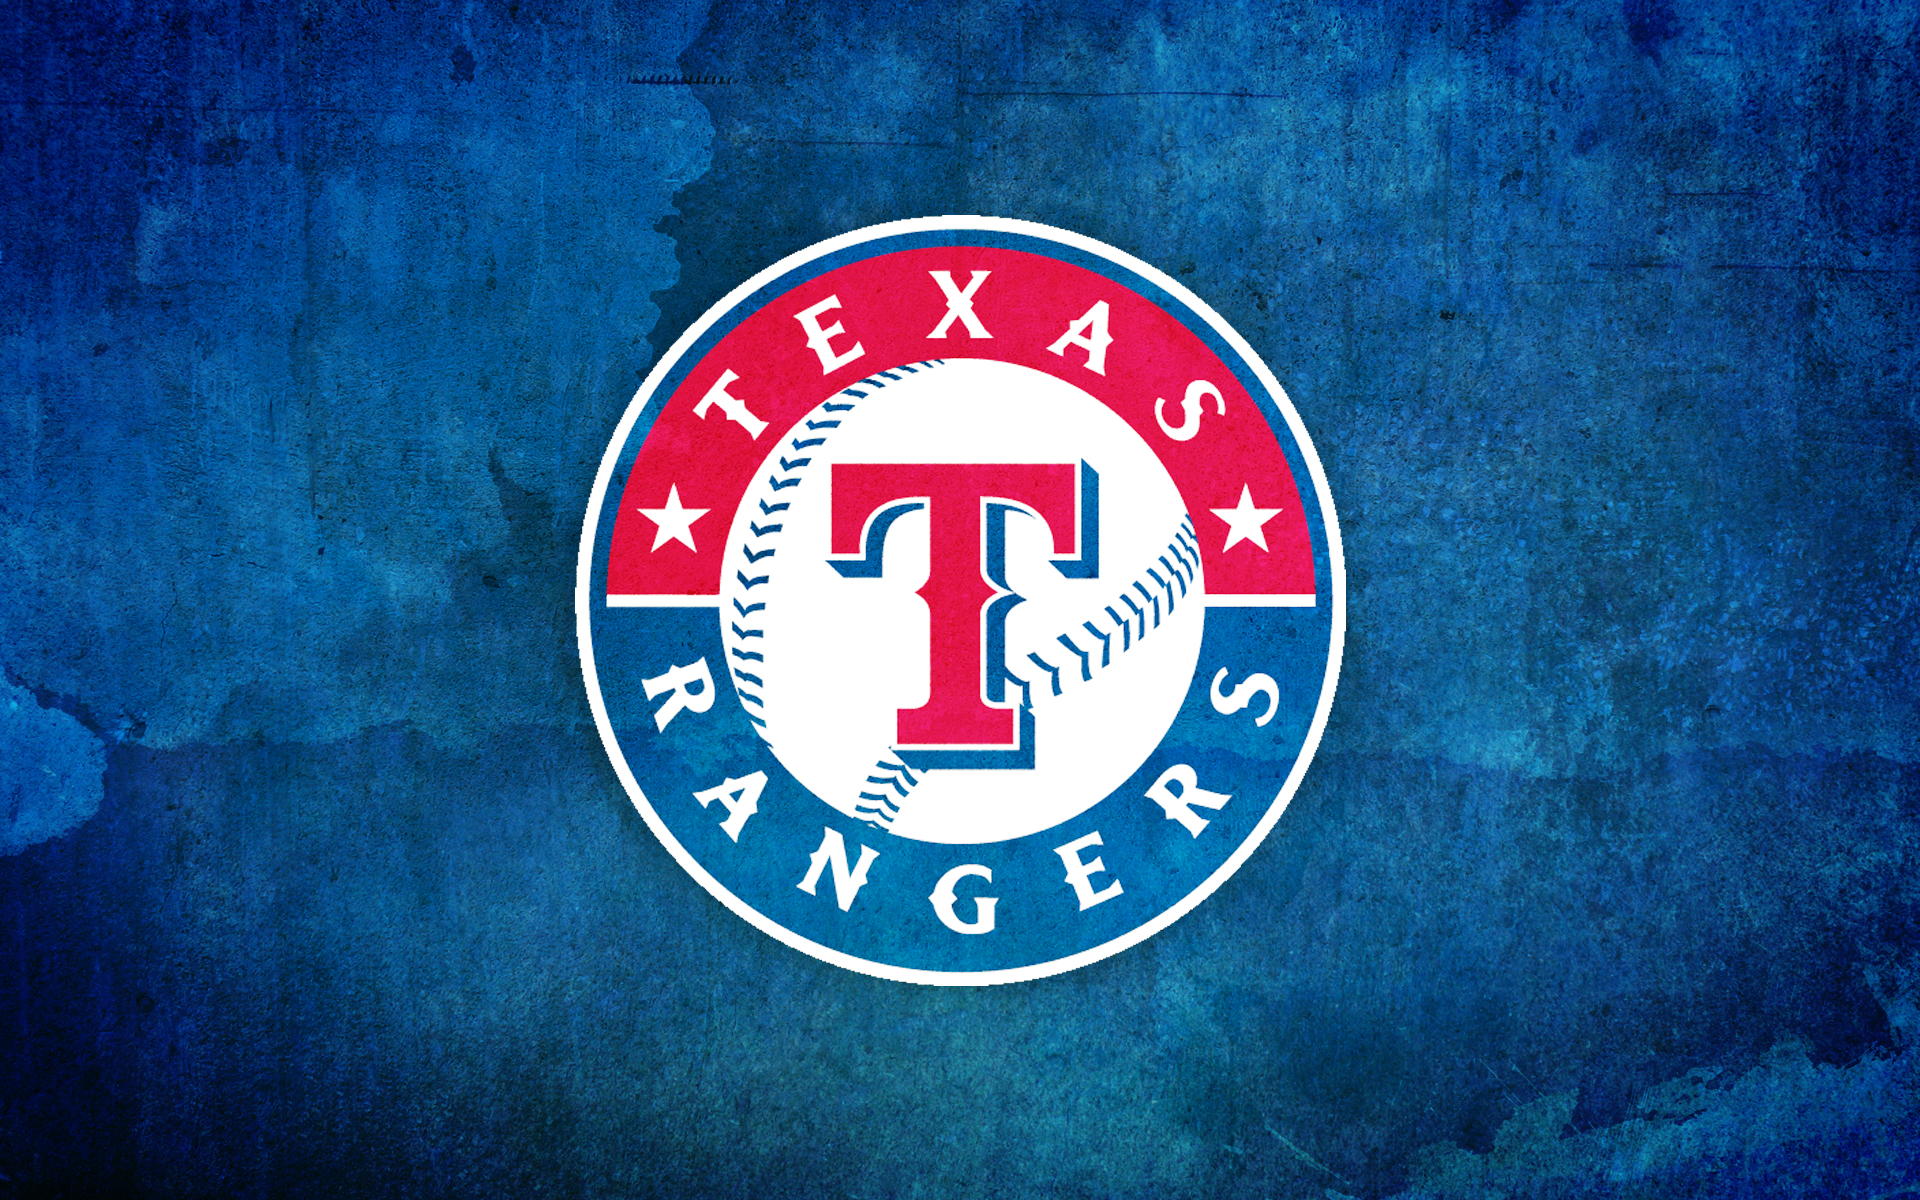 Texas Rangers 1920 x 1200 1024 x 640 1920x1200